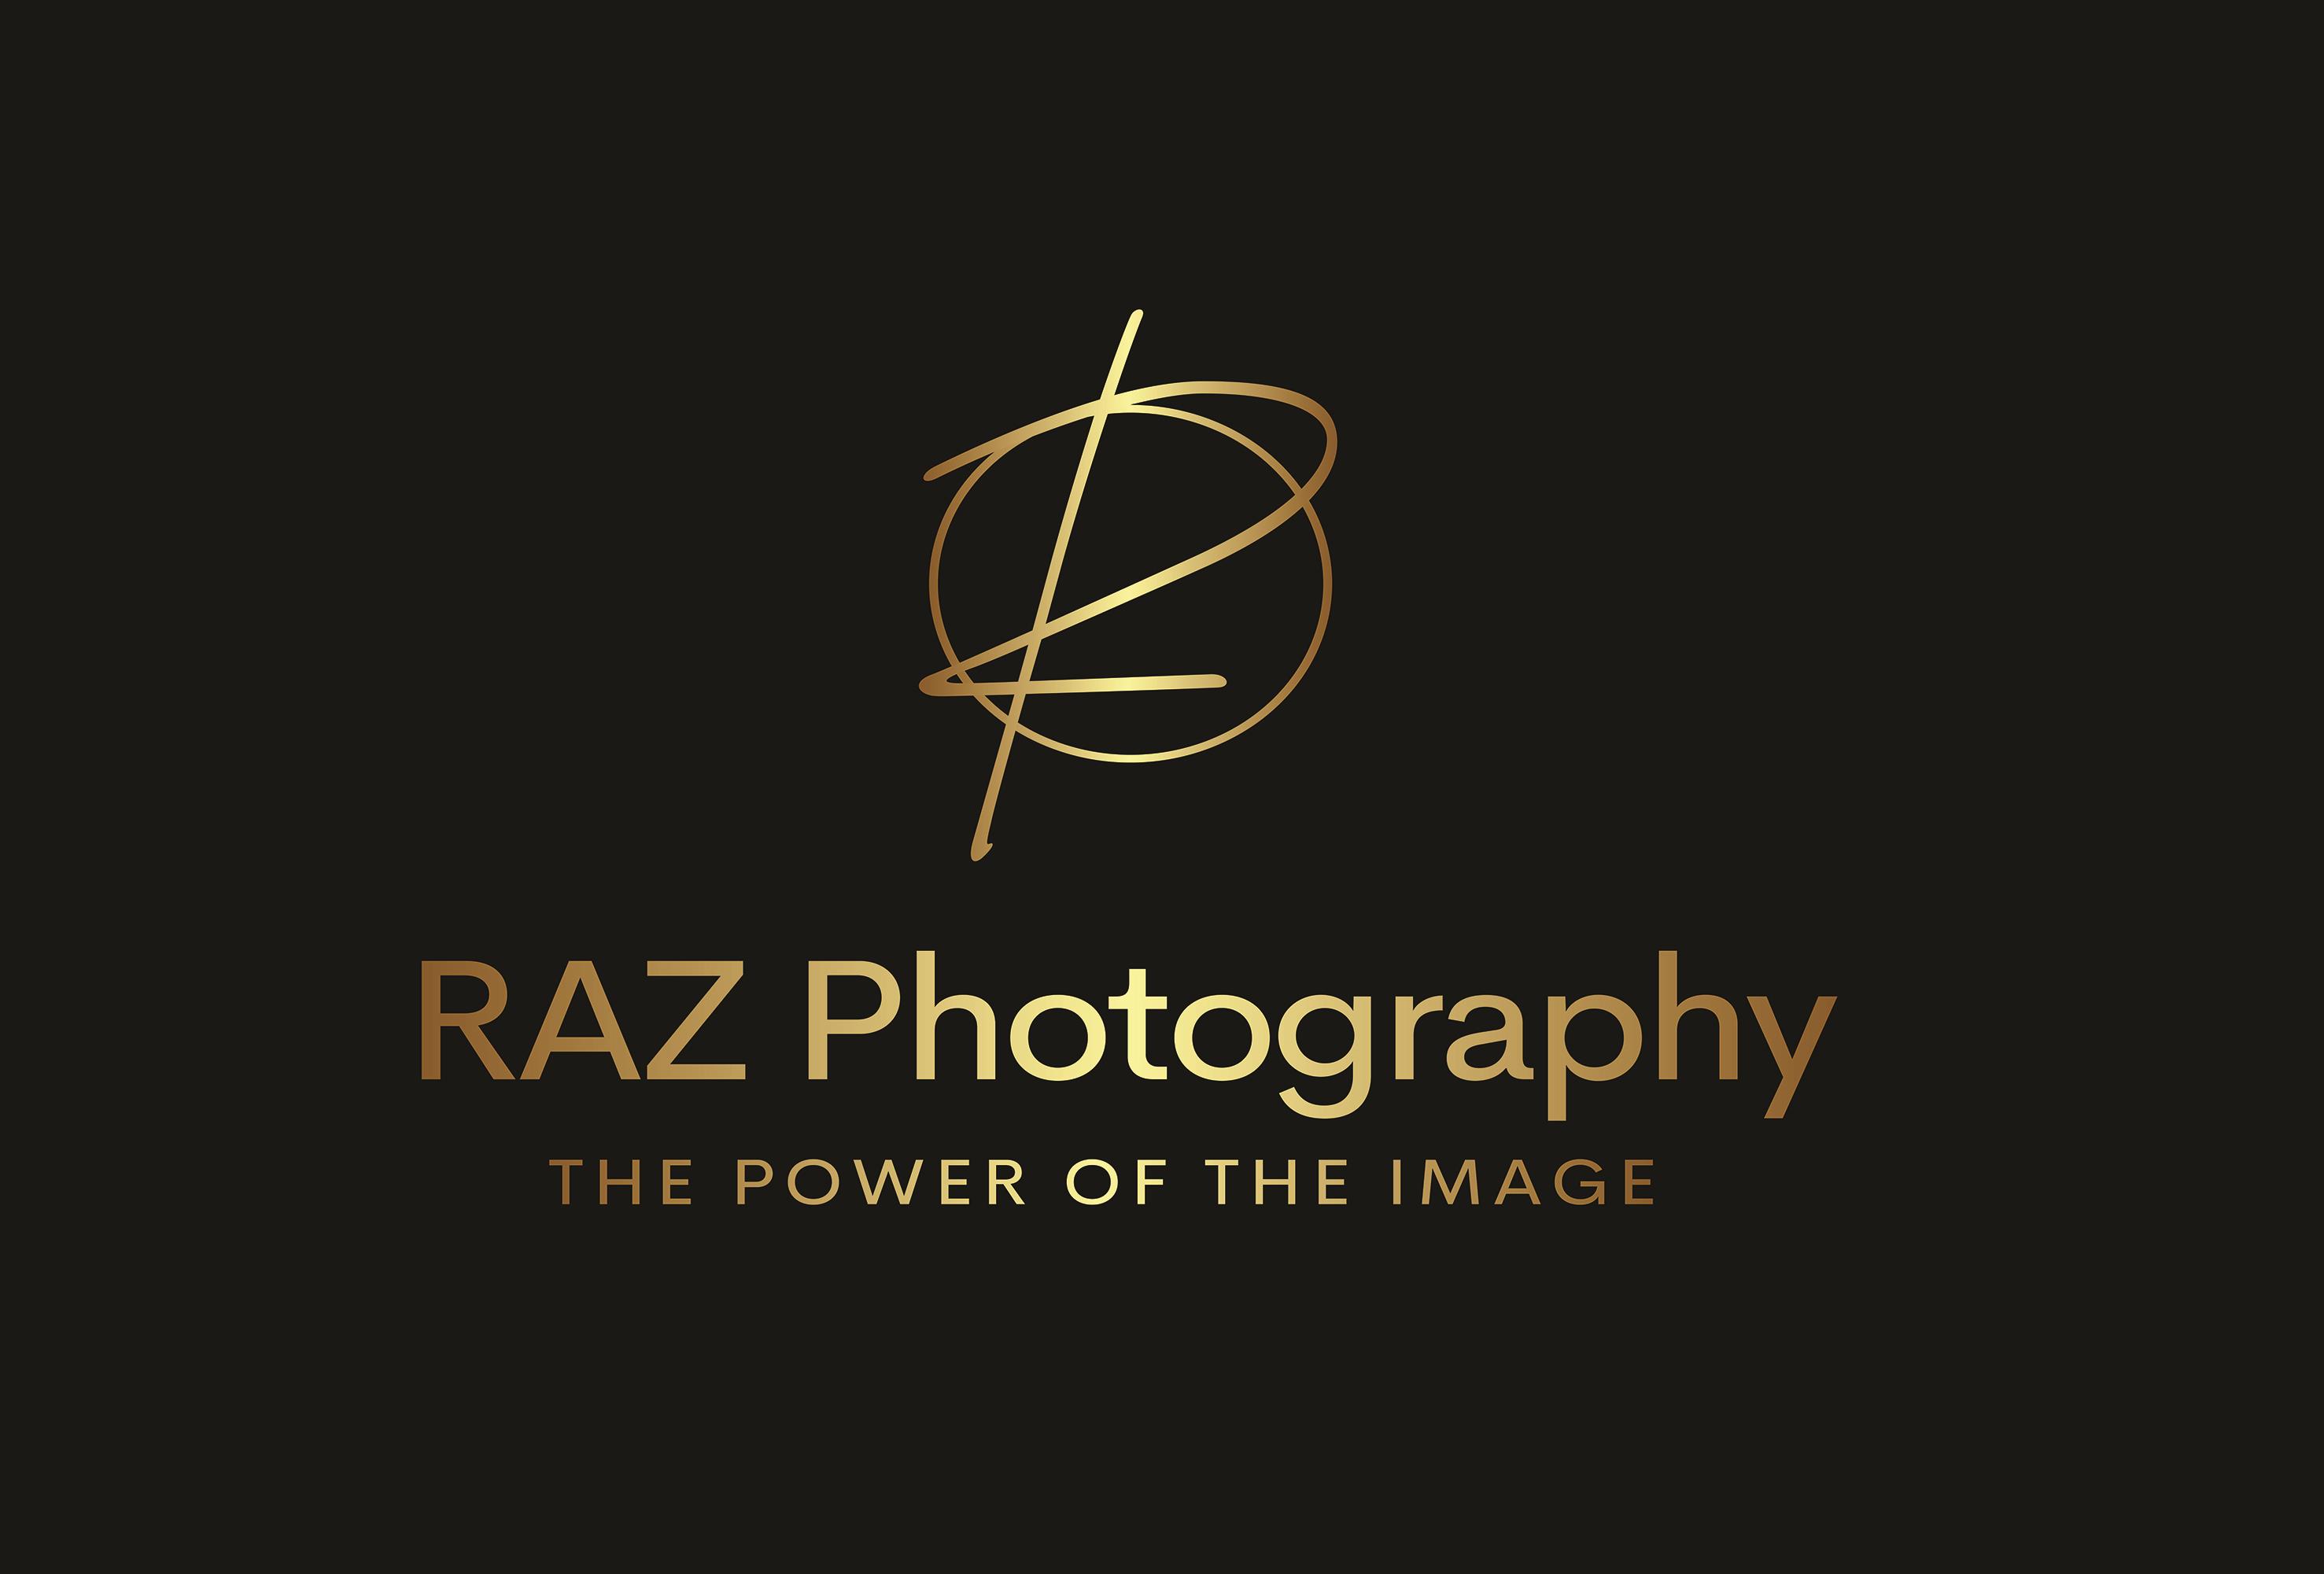 RAZ Photography